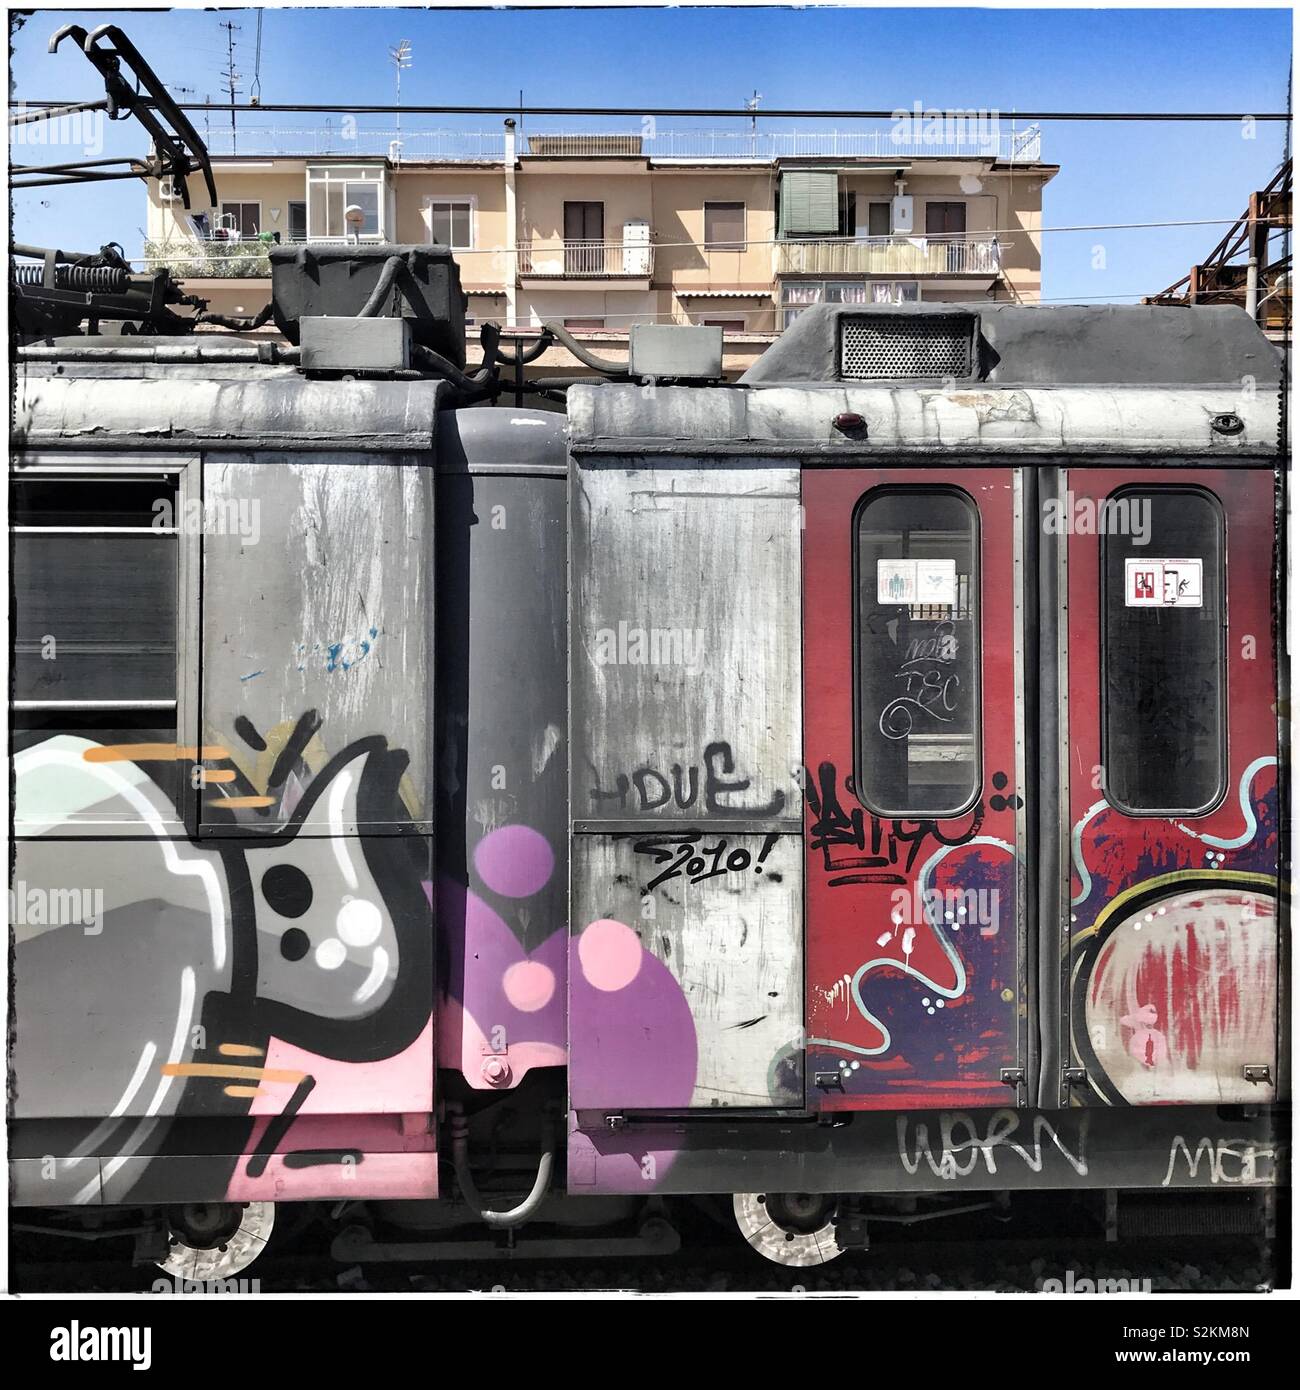 Graffiti on Italian train Stock Photo